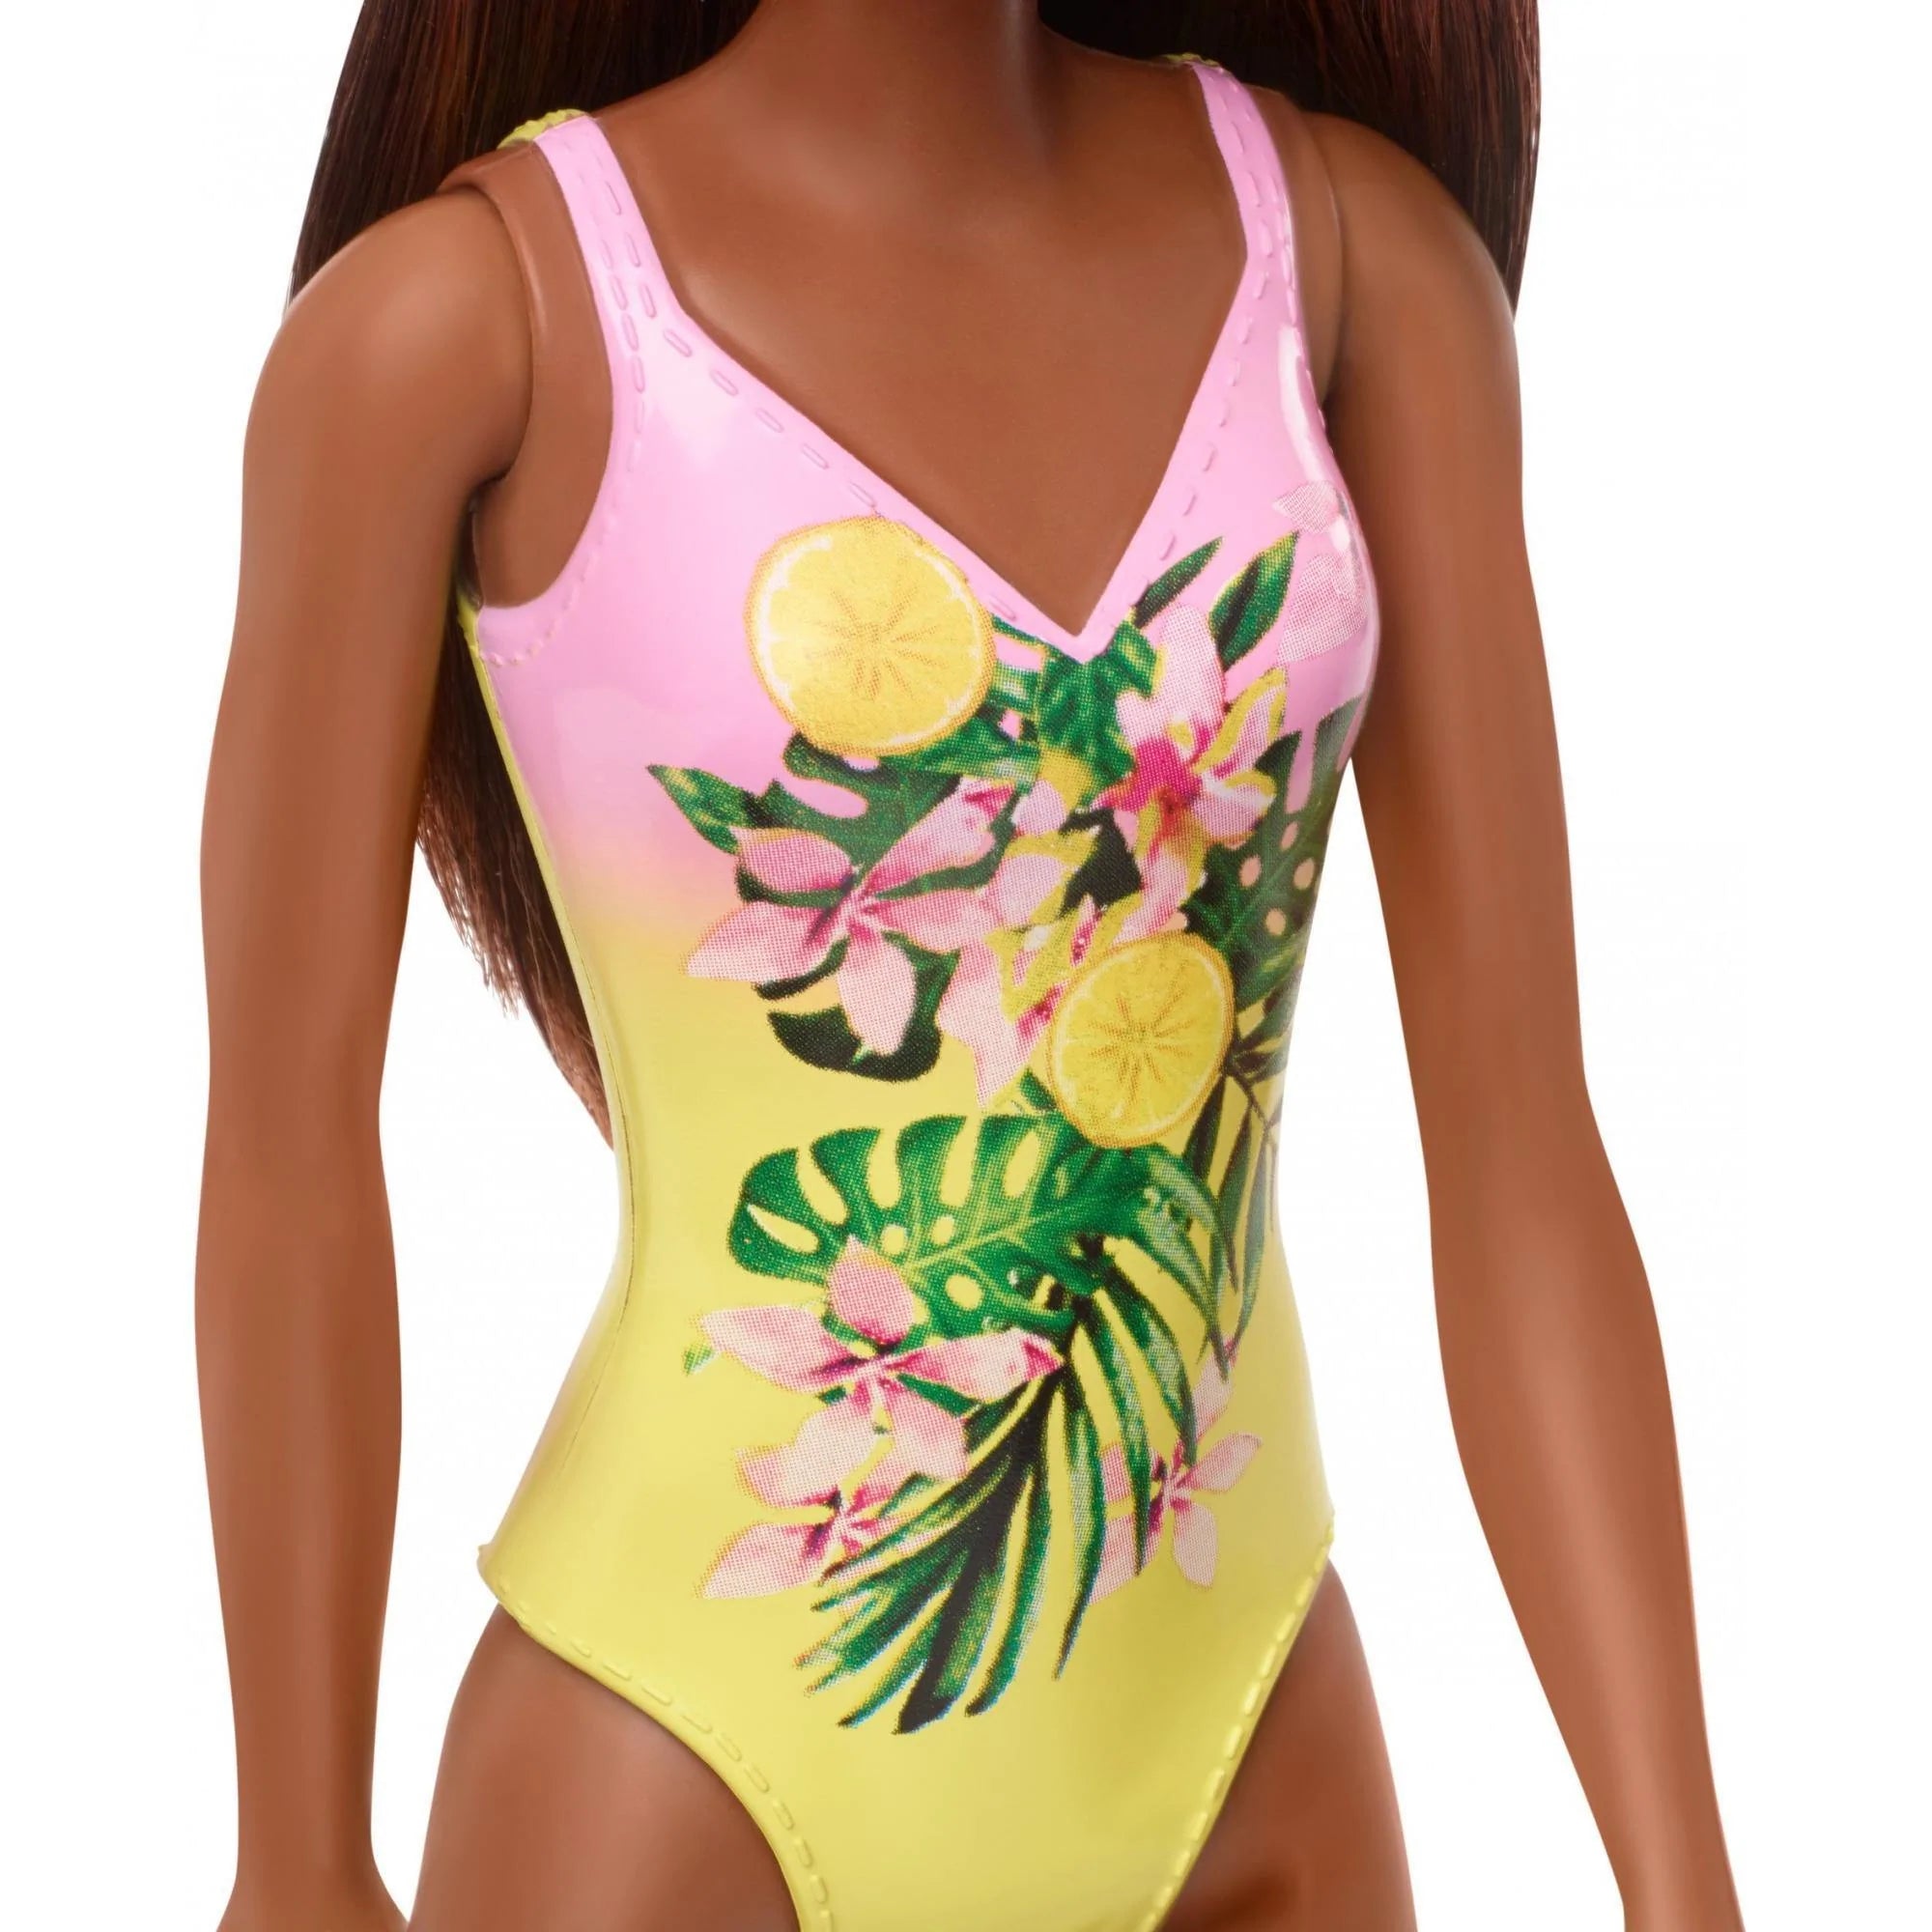 Barbie Brunette Beach Doll with Swim Suit